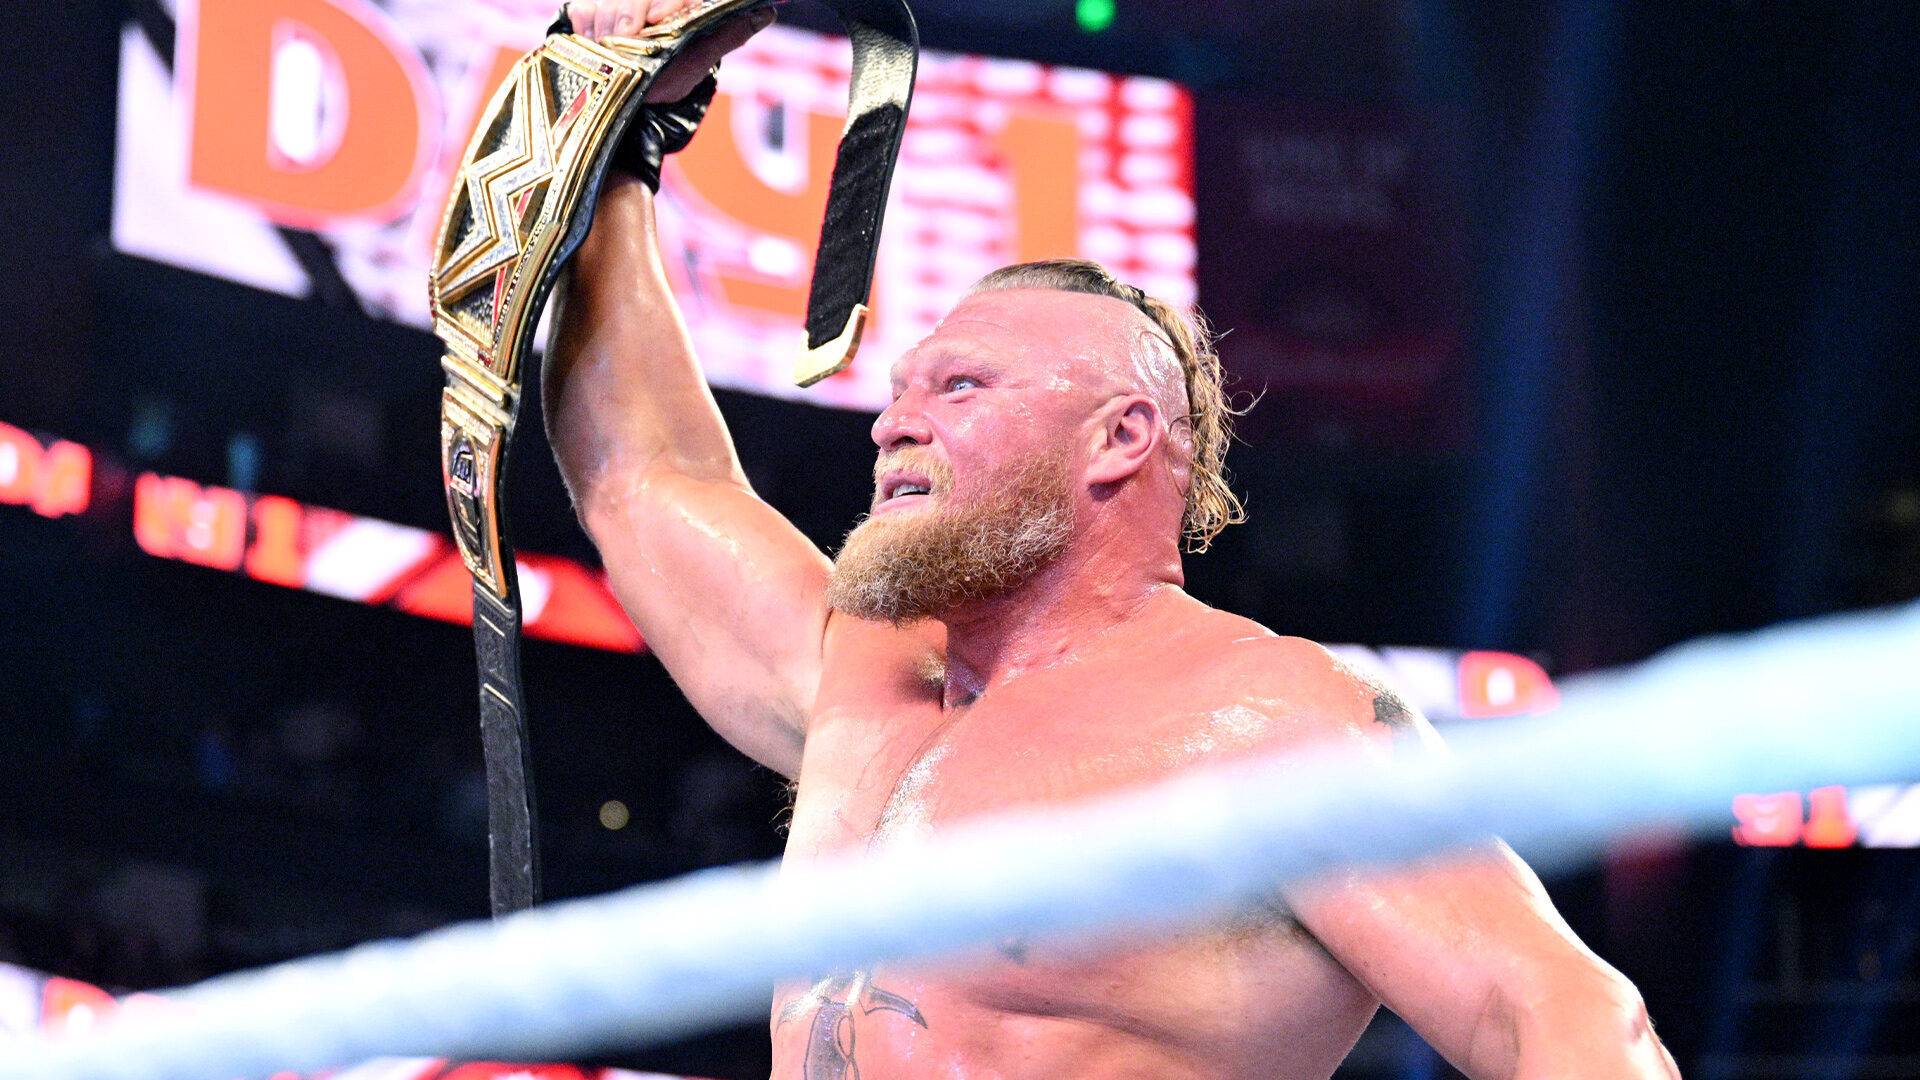 Brock Lesnar isn't retiring from WWE just yet